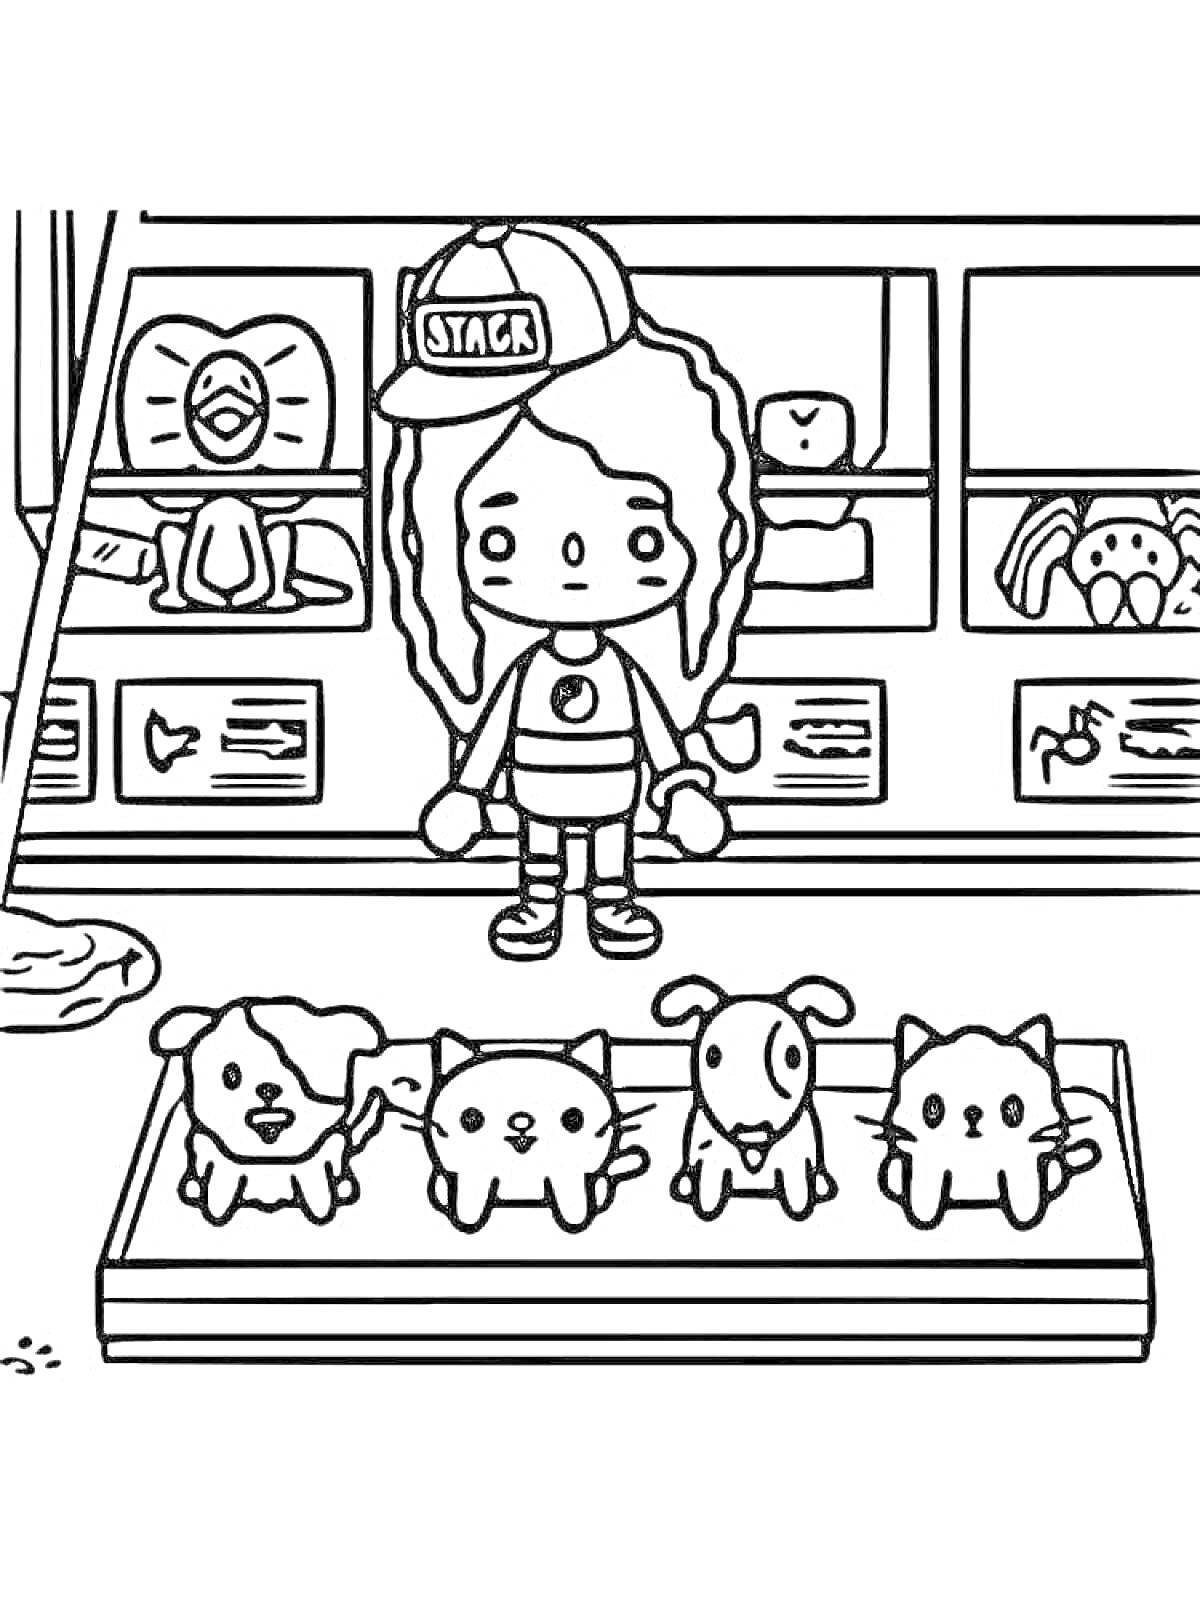 Раскраска Девочка с косичками в кепке в зоомагазине, лежащие на прилавке два щенка и два котенка